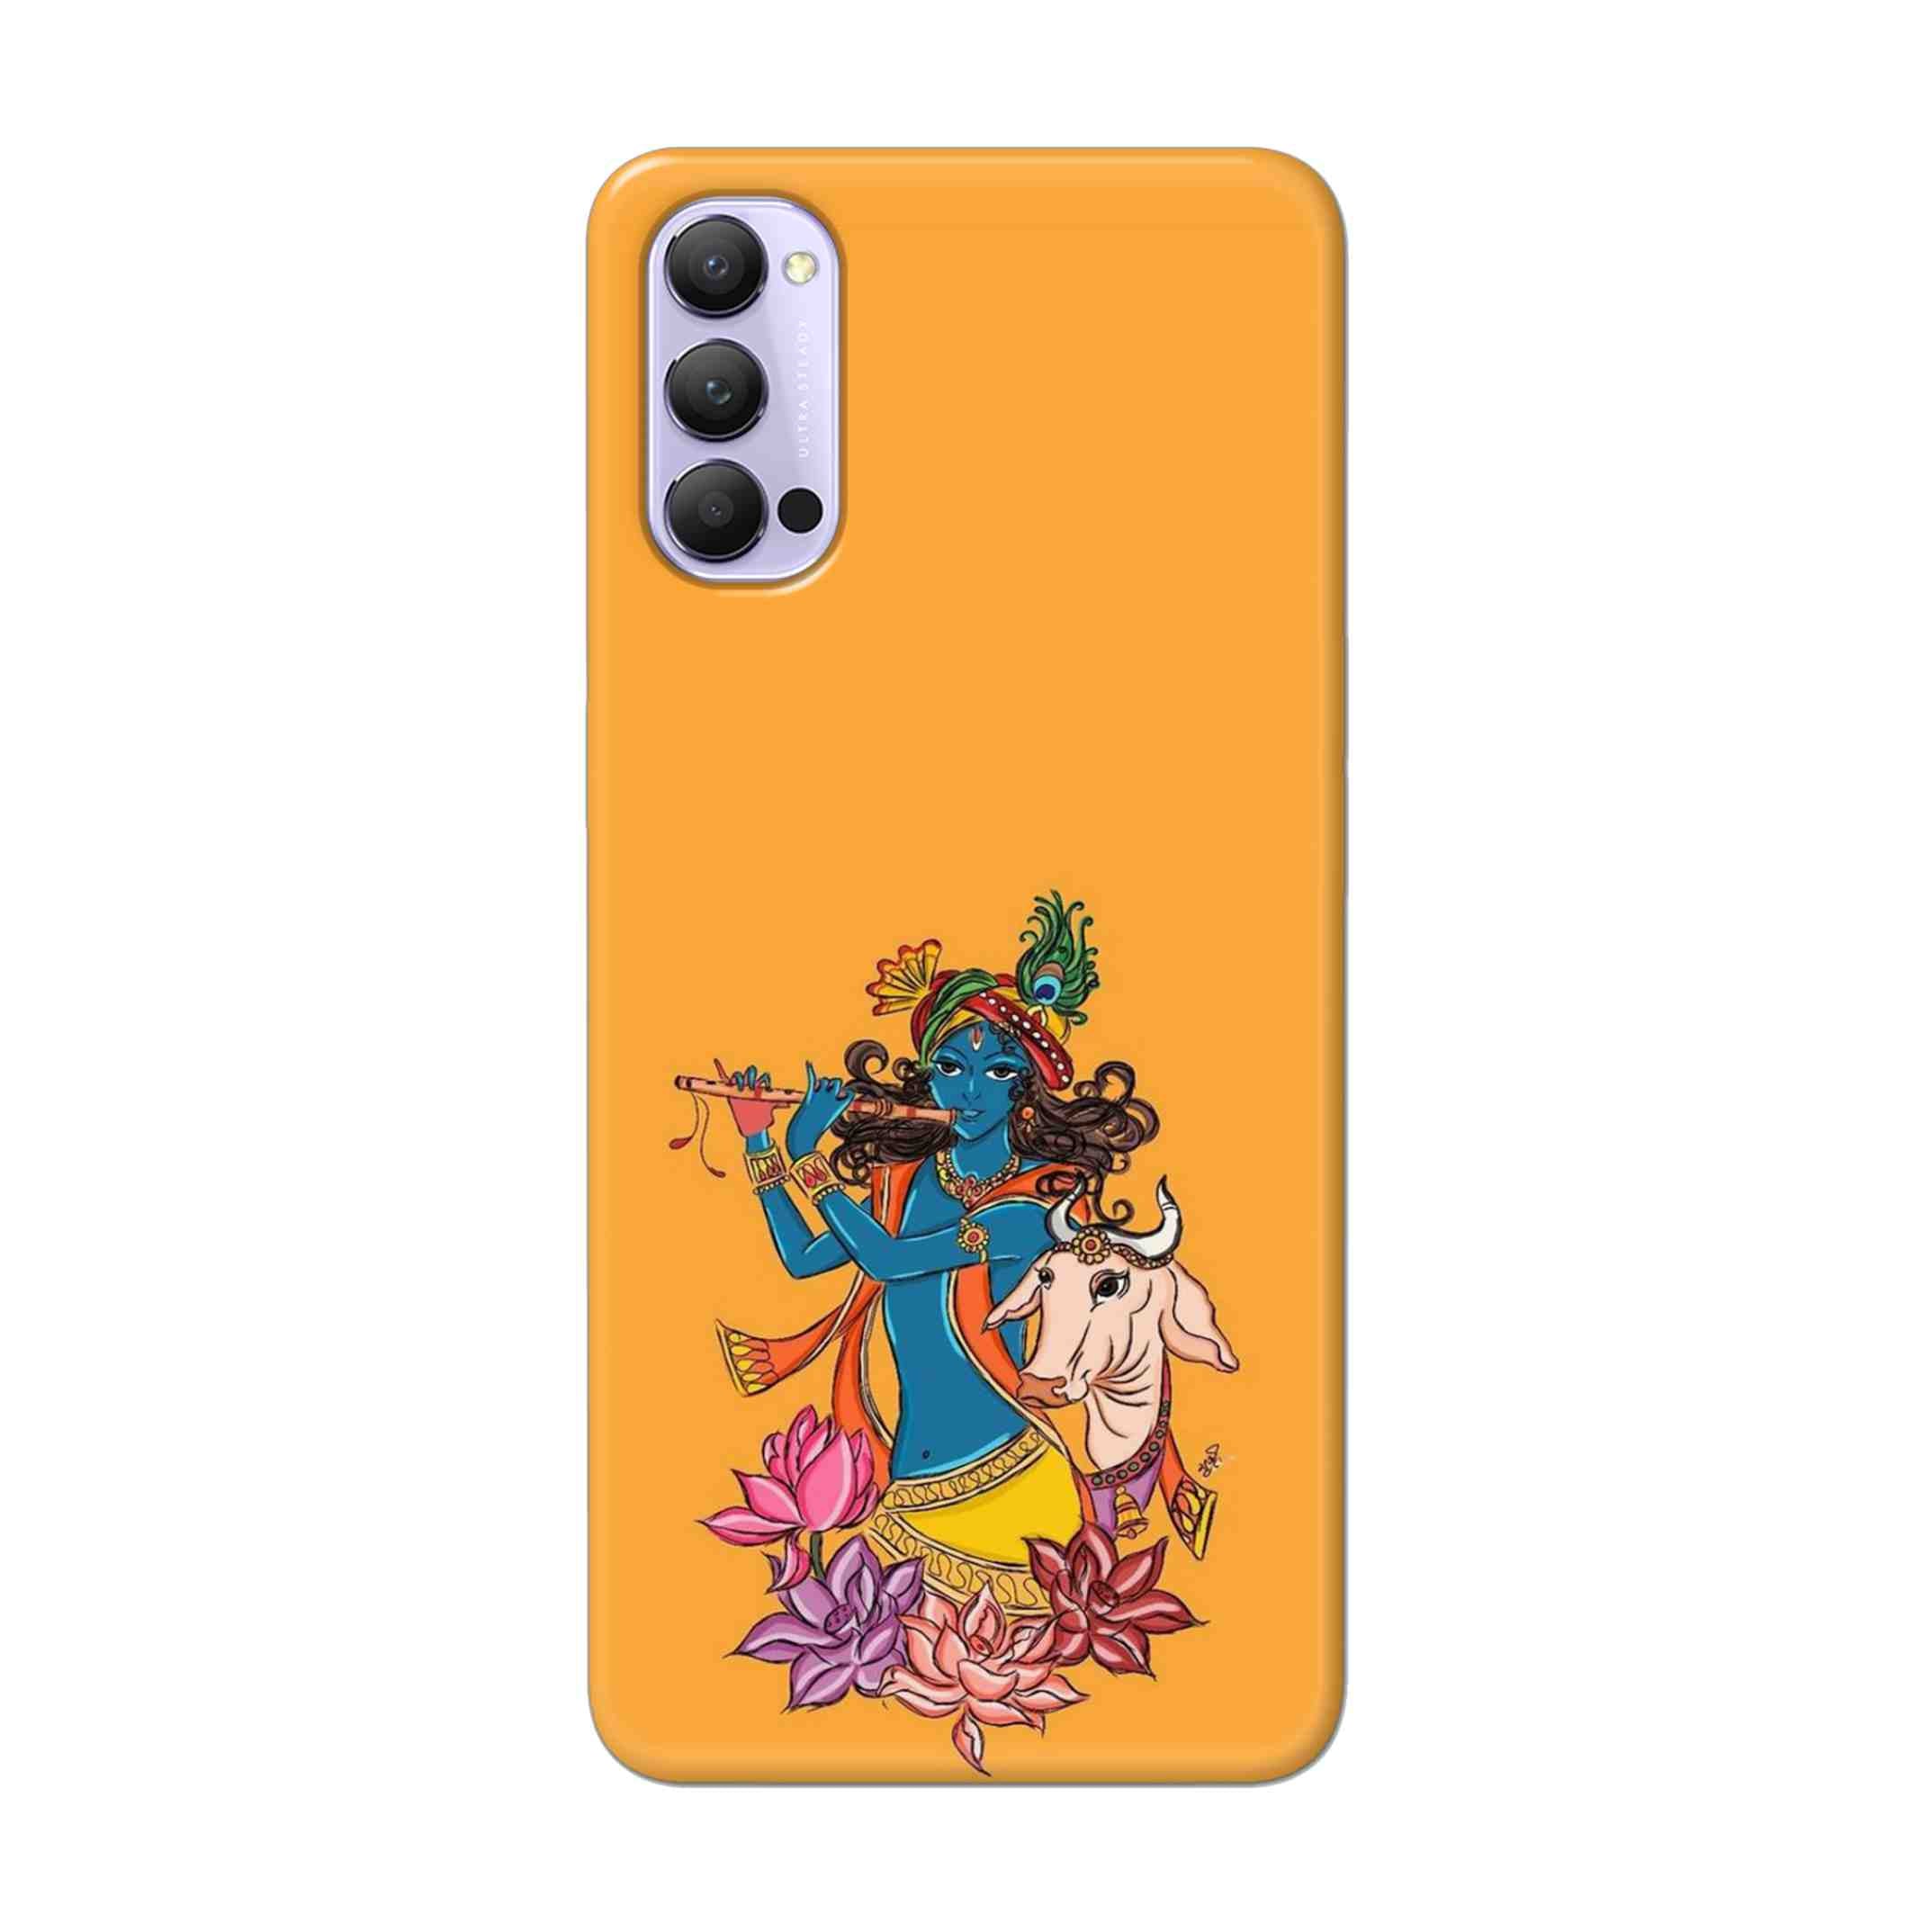 Buy Radhe Krishna Hard Back Mobile Phone Case Cover For Oppo Reno 4 Pro Online